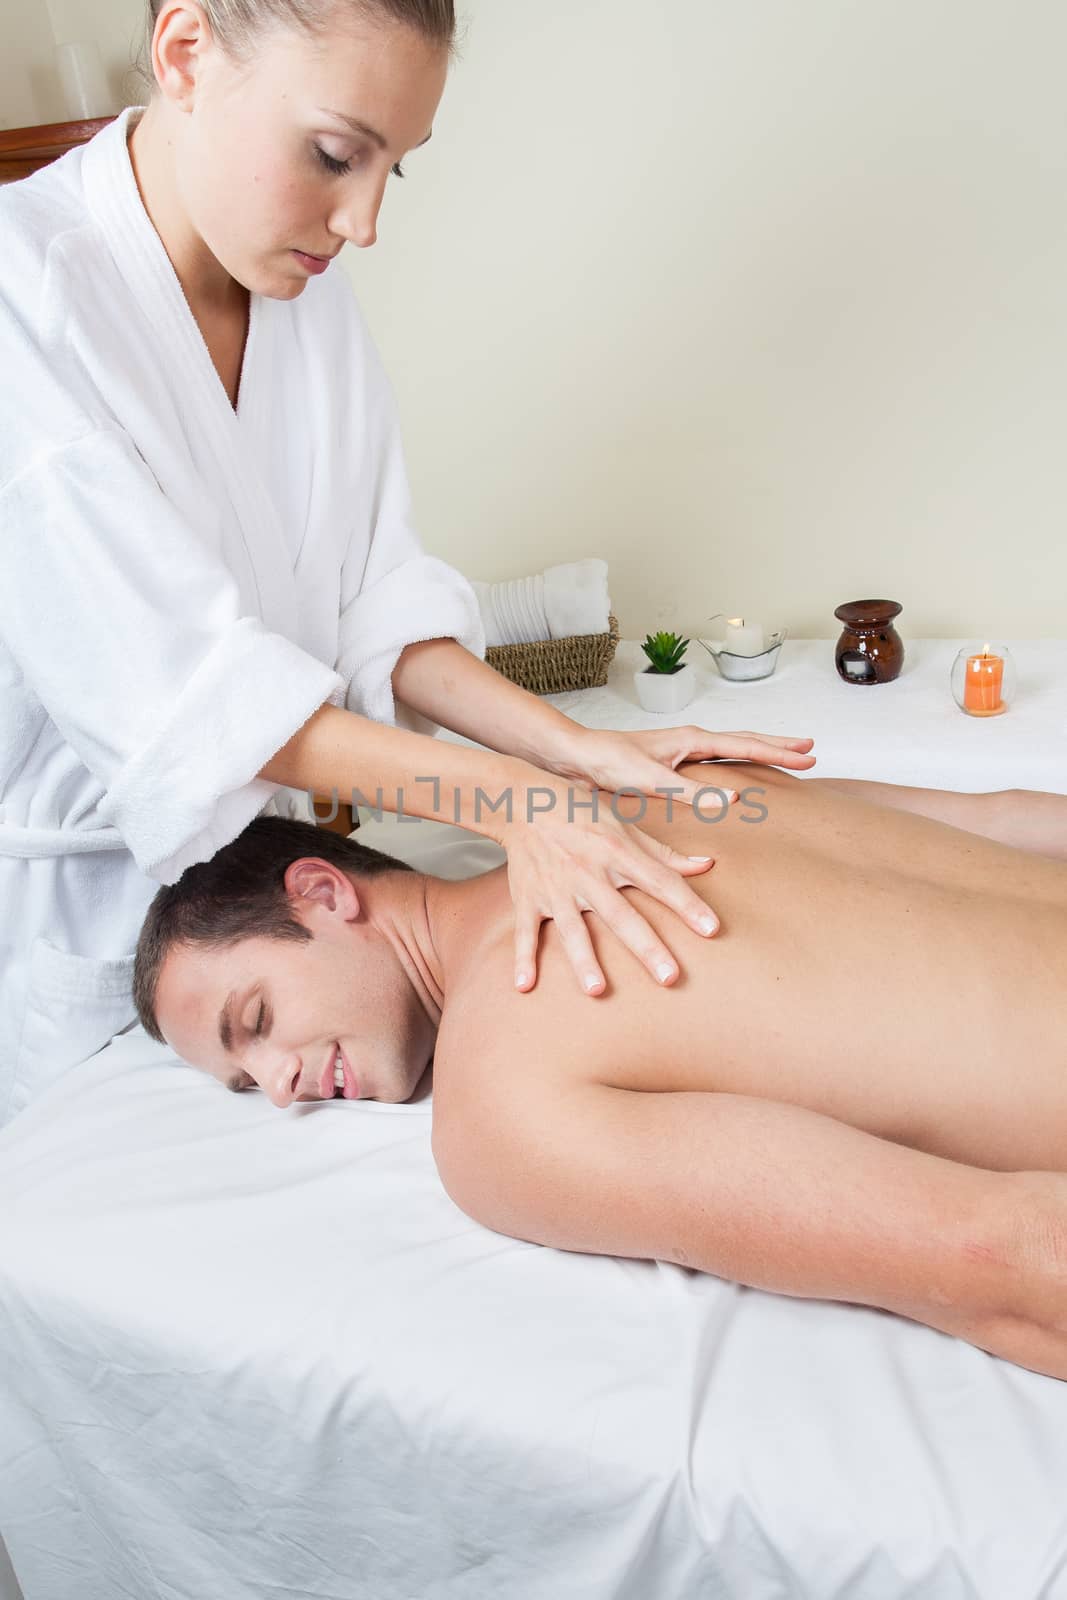 Woman give a massage to man